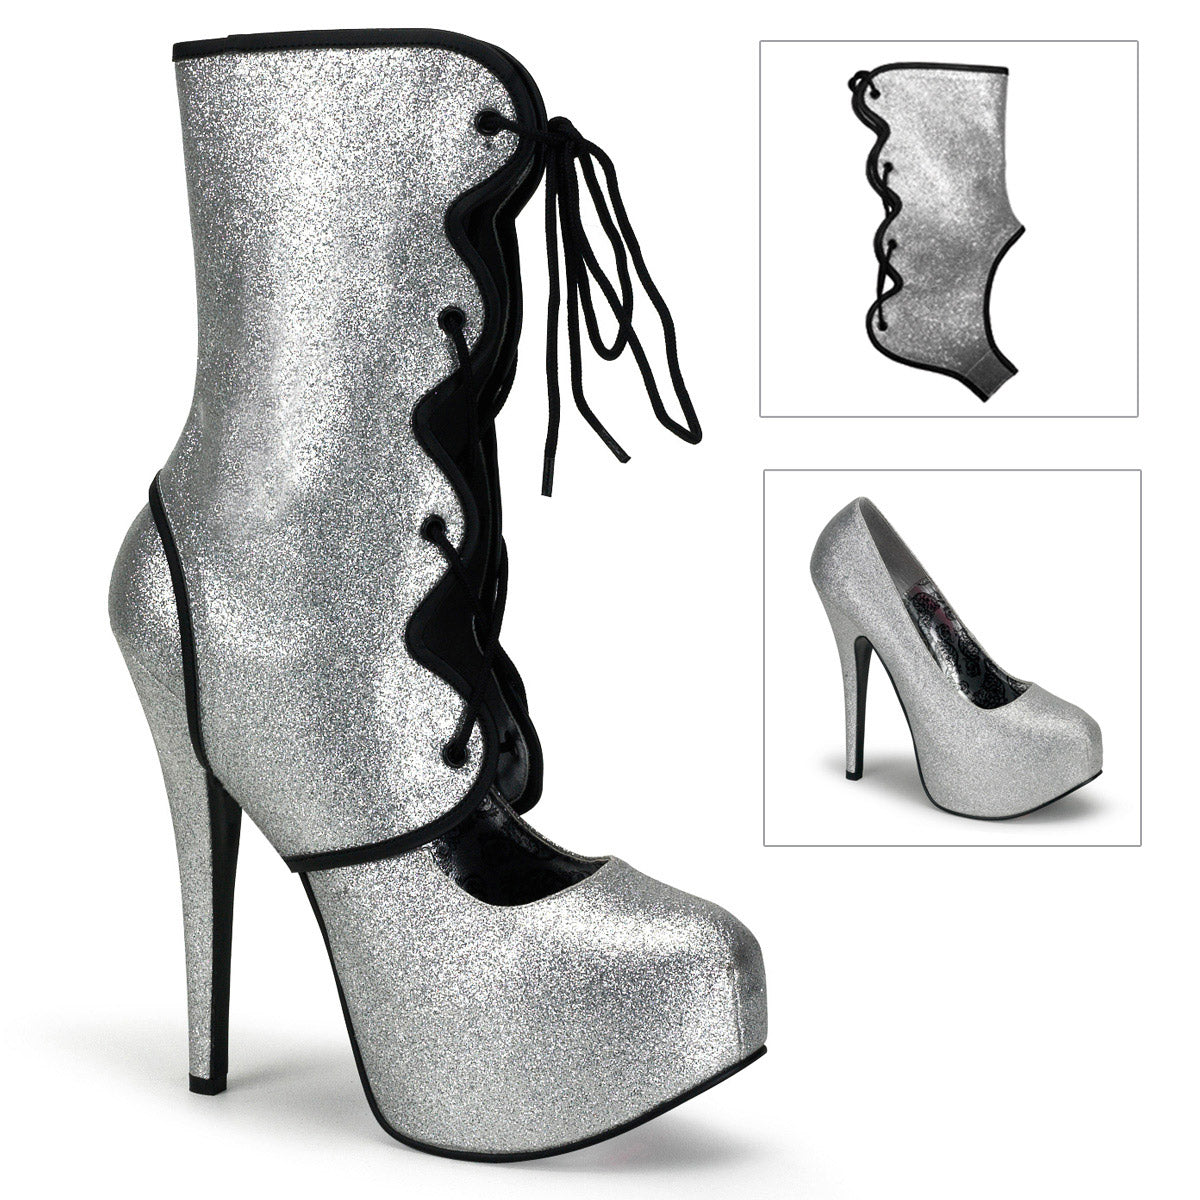 Sexy Platform Stiletto Ankle Length Glitter Pumps High Heels Shoes Pleaser Bordello TEEZE/31G